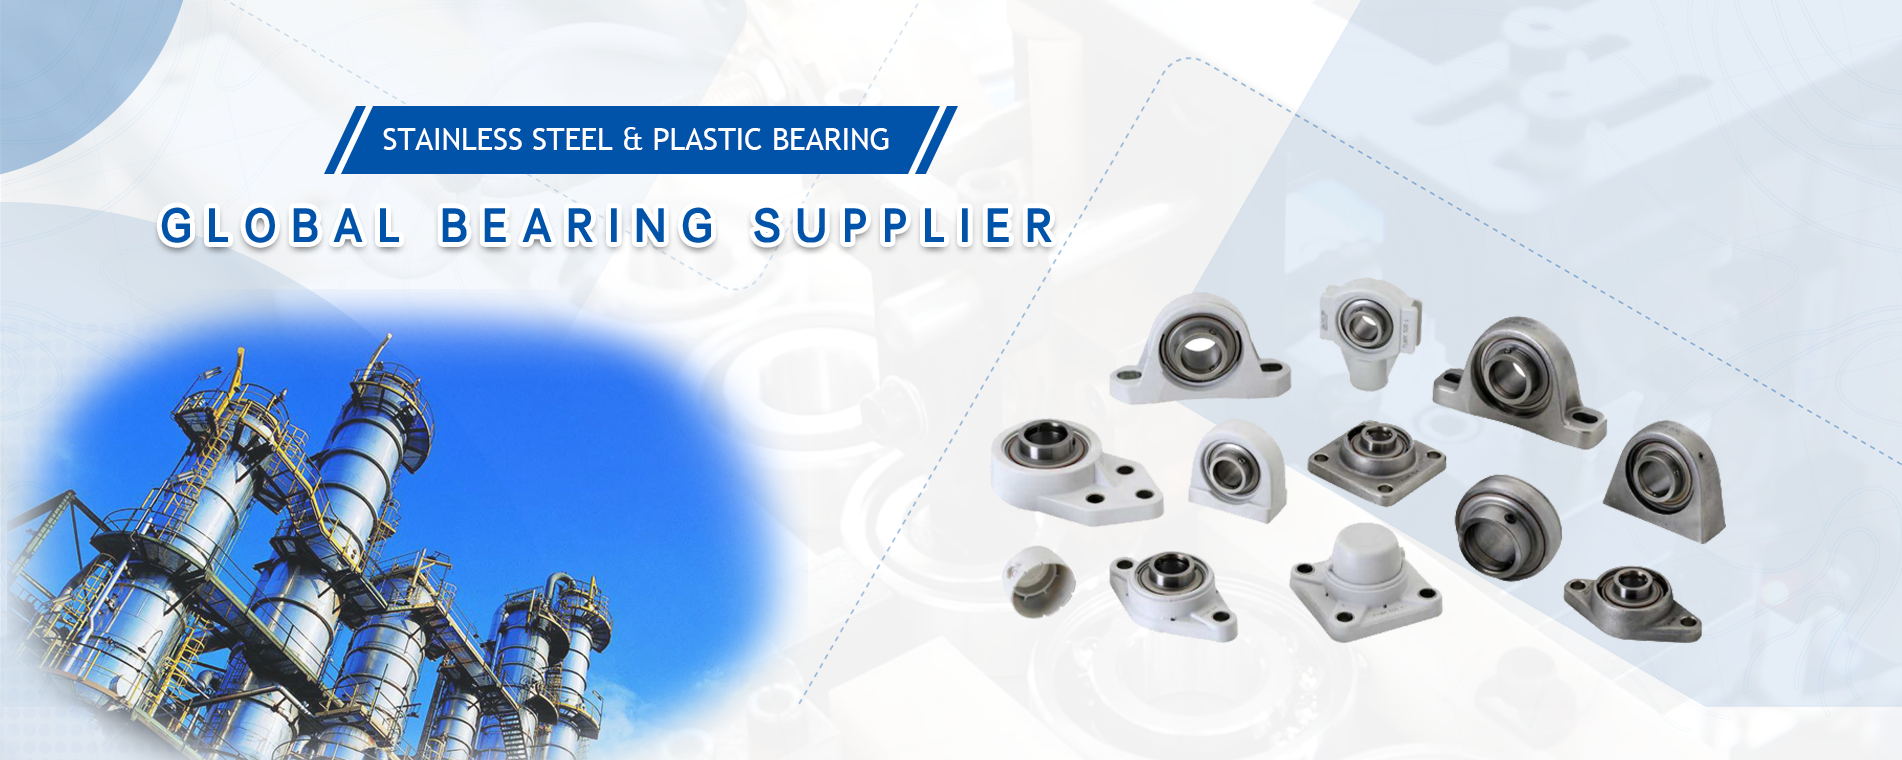 Stainless steel & plastic bearing